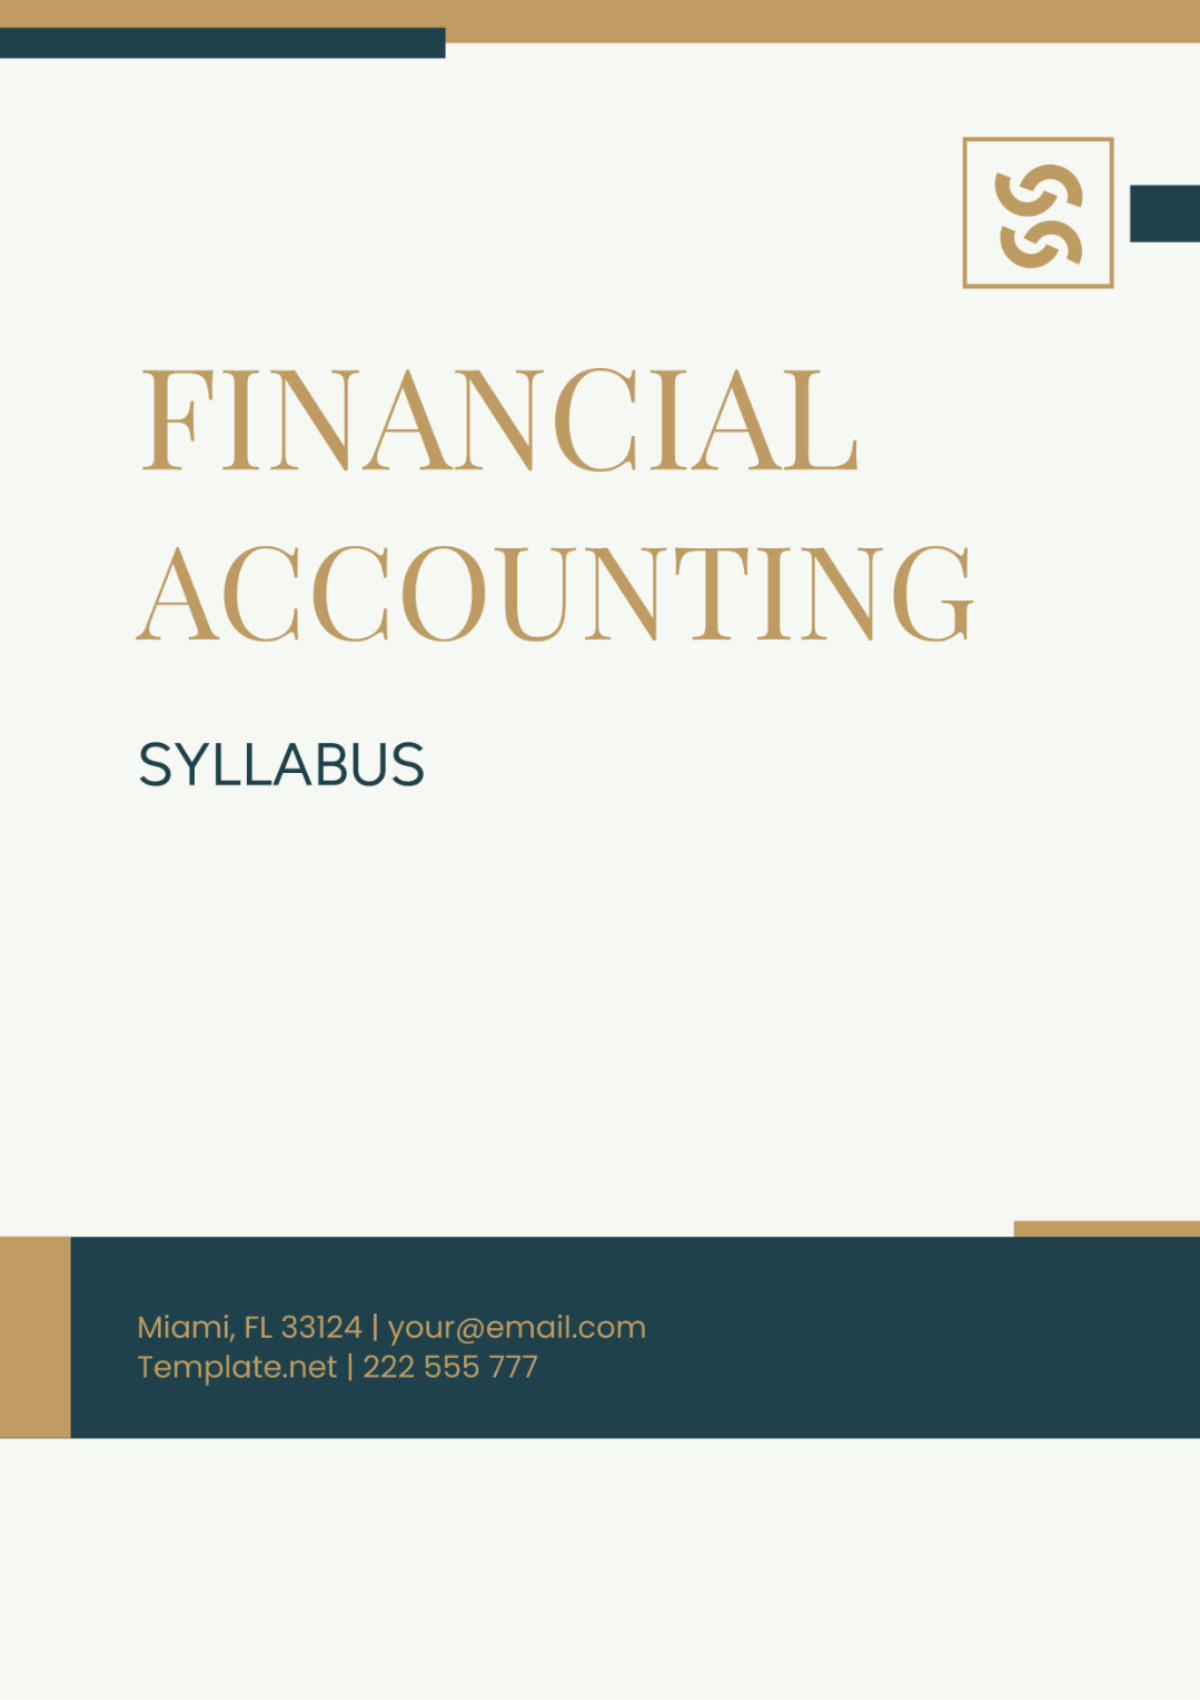 Financial Accounting Syllabus Template